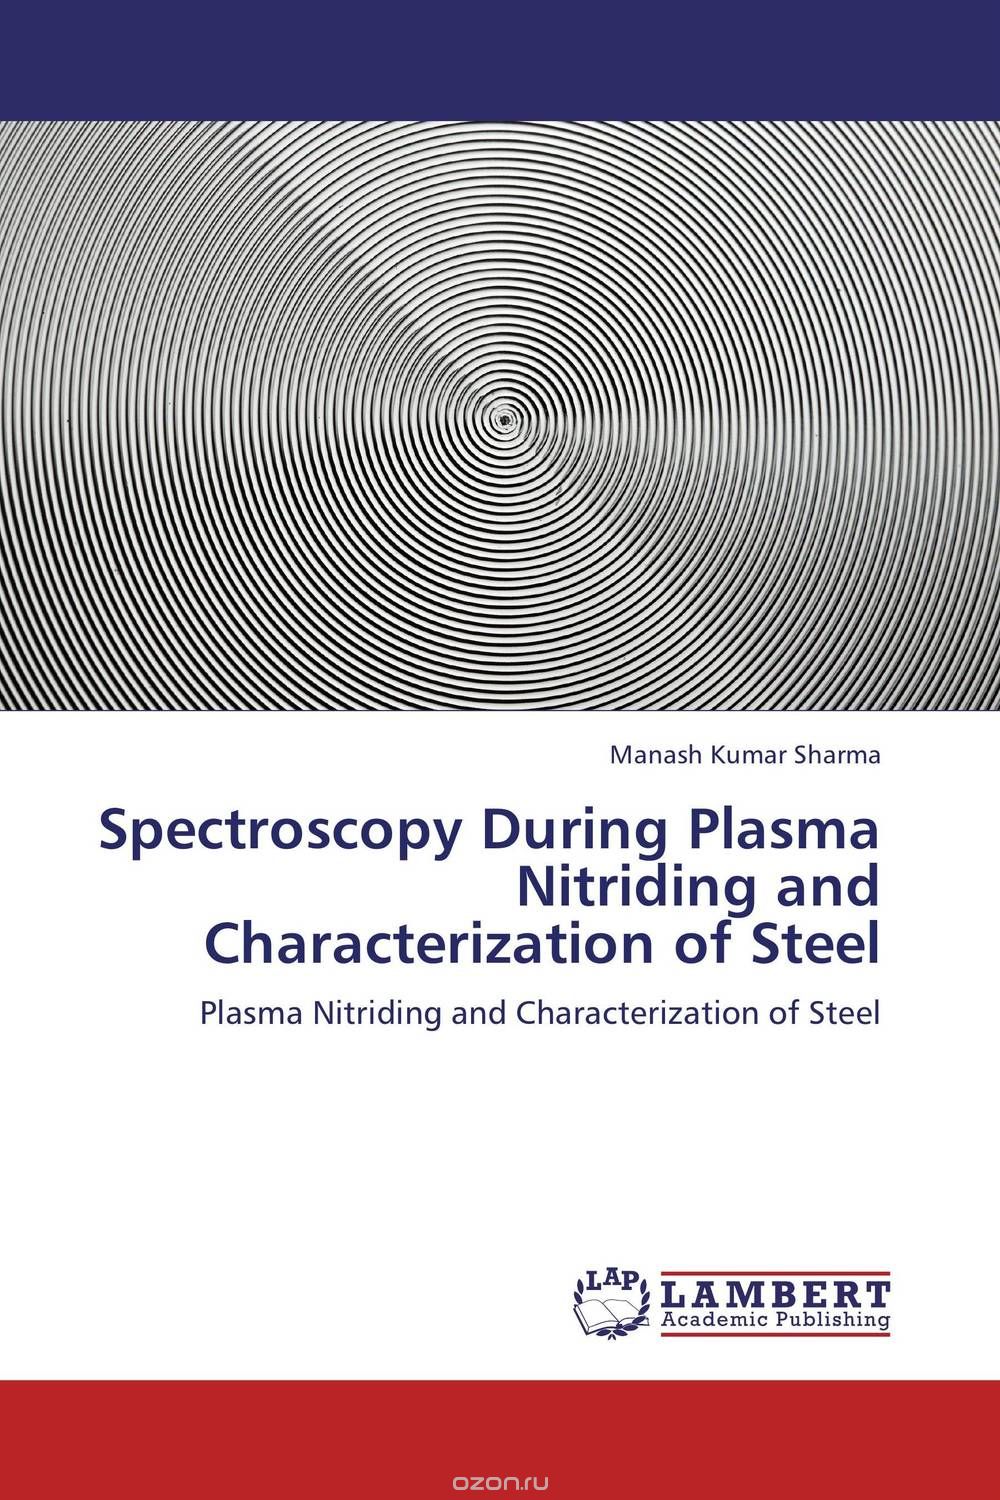 Скачать книгу "Spectroscopy During Plasma Nitriding and Characterization of Steel"